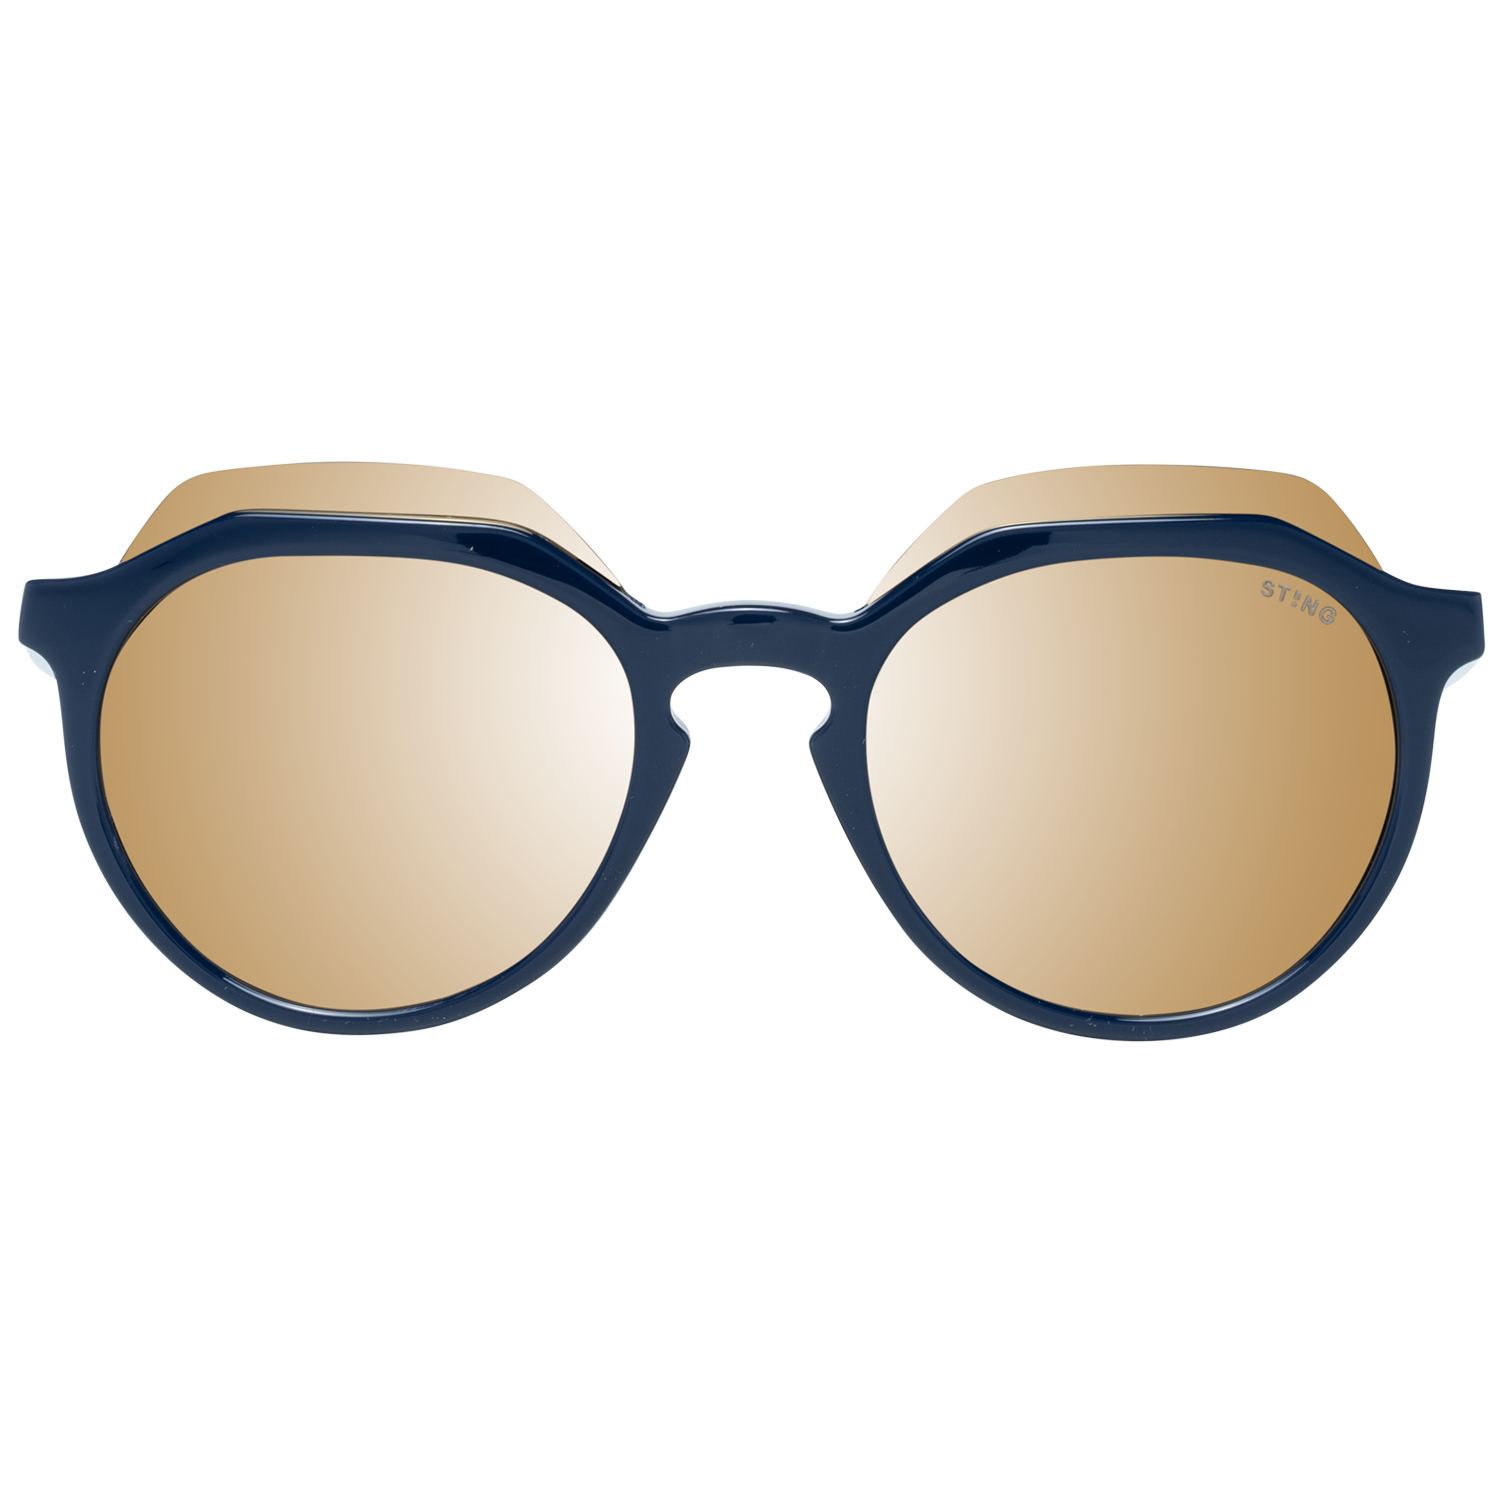 Sting Sunglasses Sting Sunglasses SST197 991G 49 Eyeglasses Eyewear UK USA Australia 